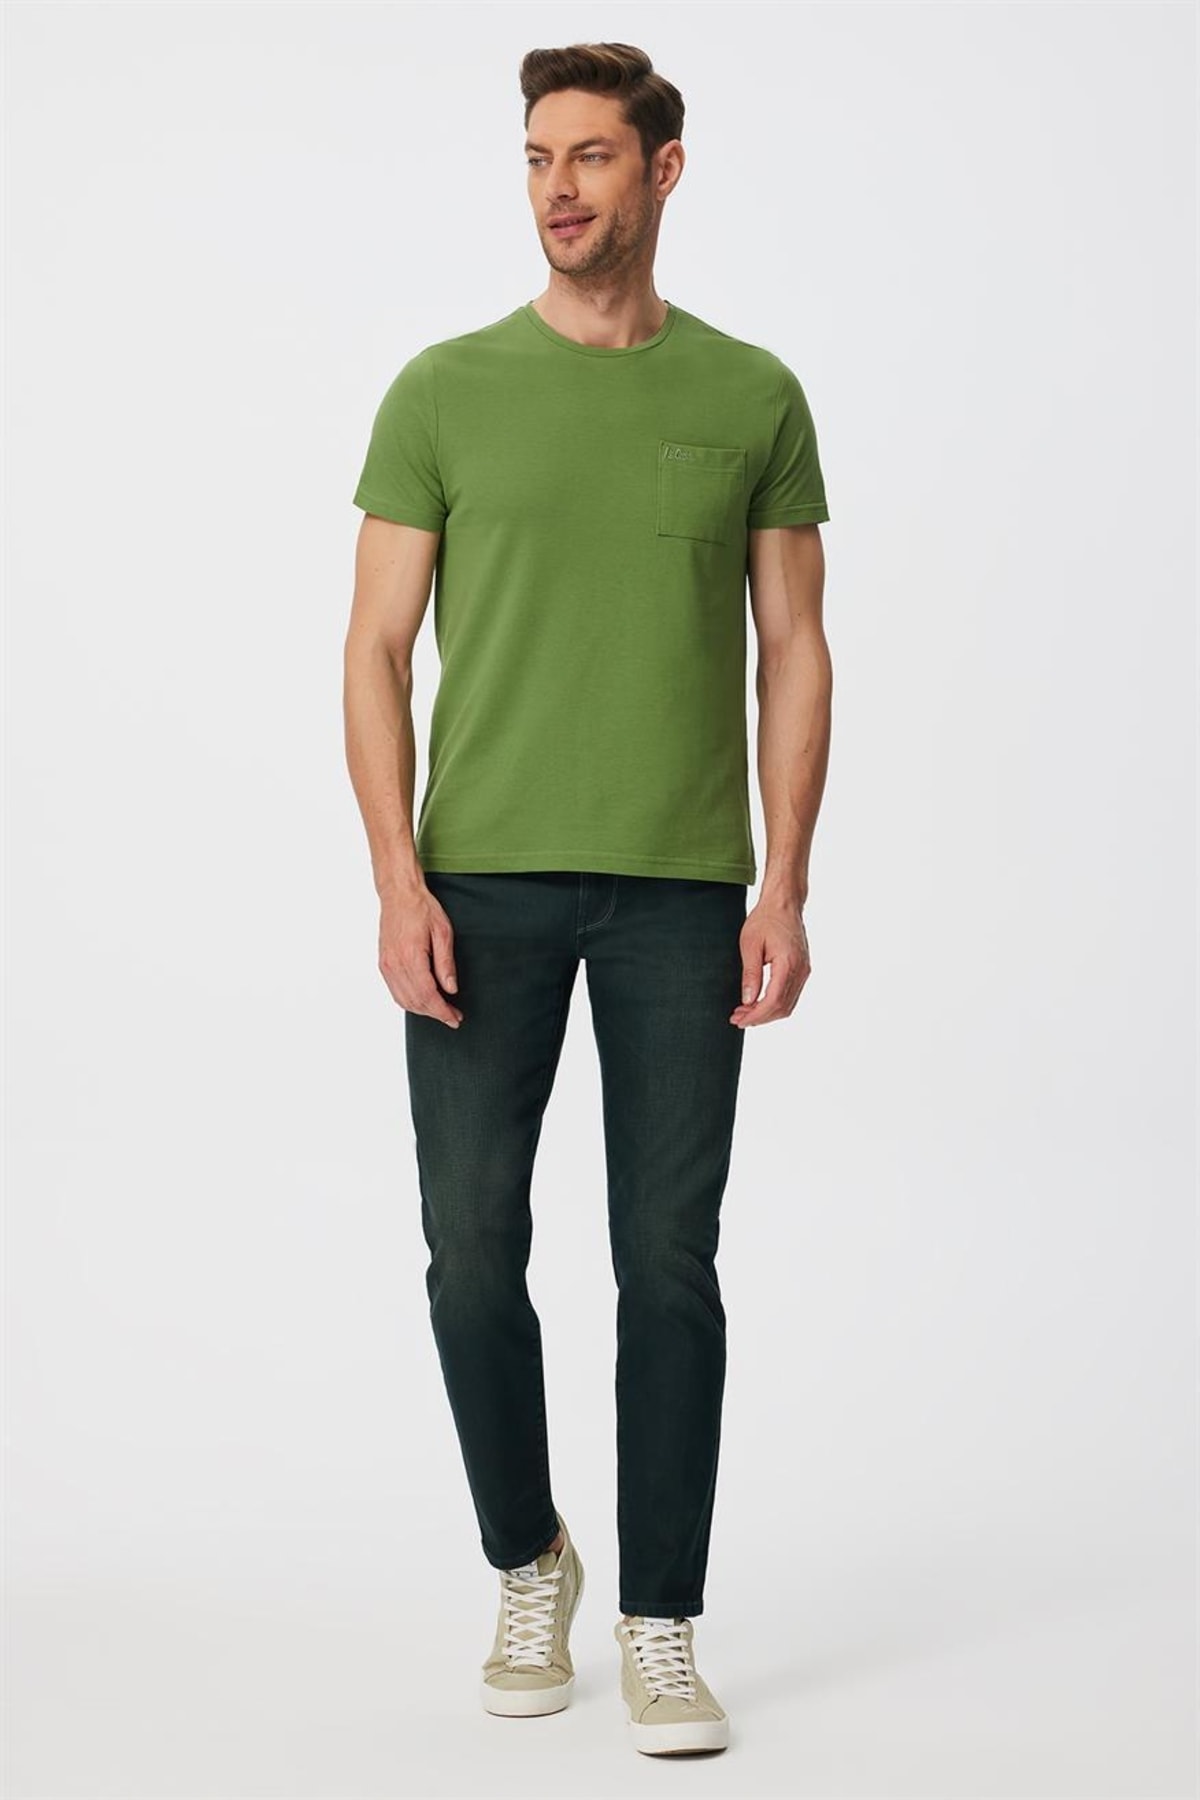 Lee Cooper Men's Twingo O Neck Pique T-shirt Green